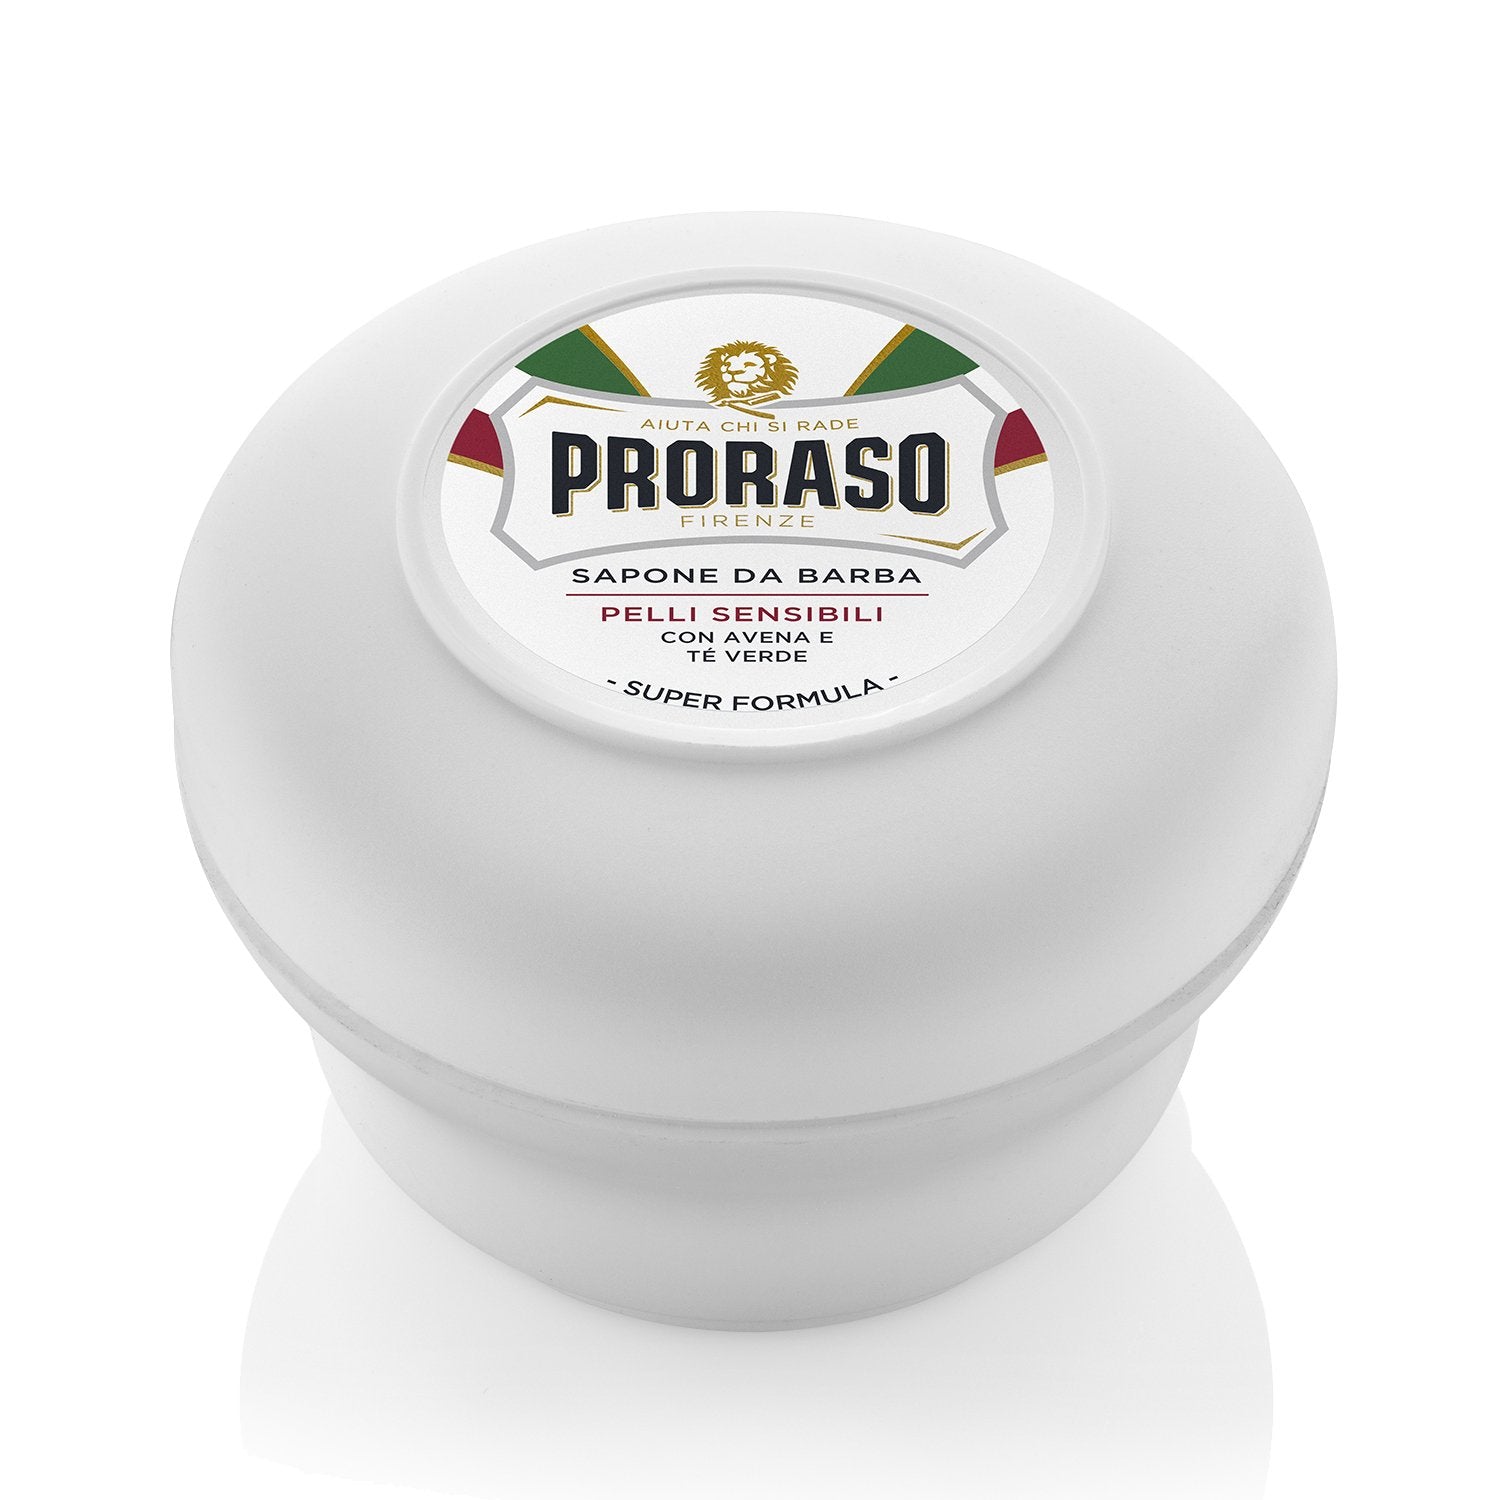 Proraso Shaving Cream Jar SENSITIVE (150ml)